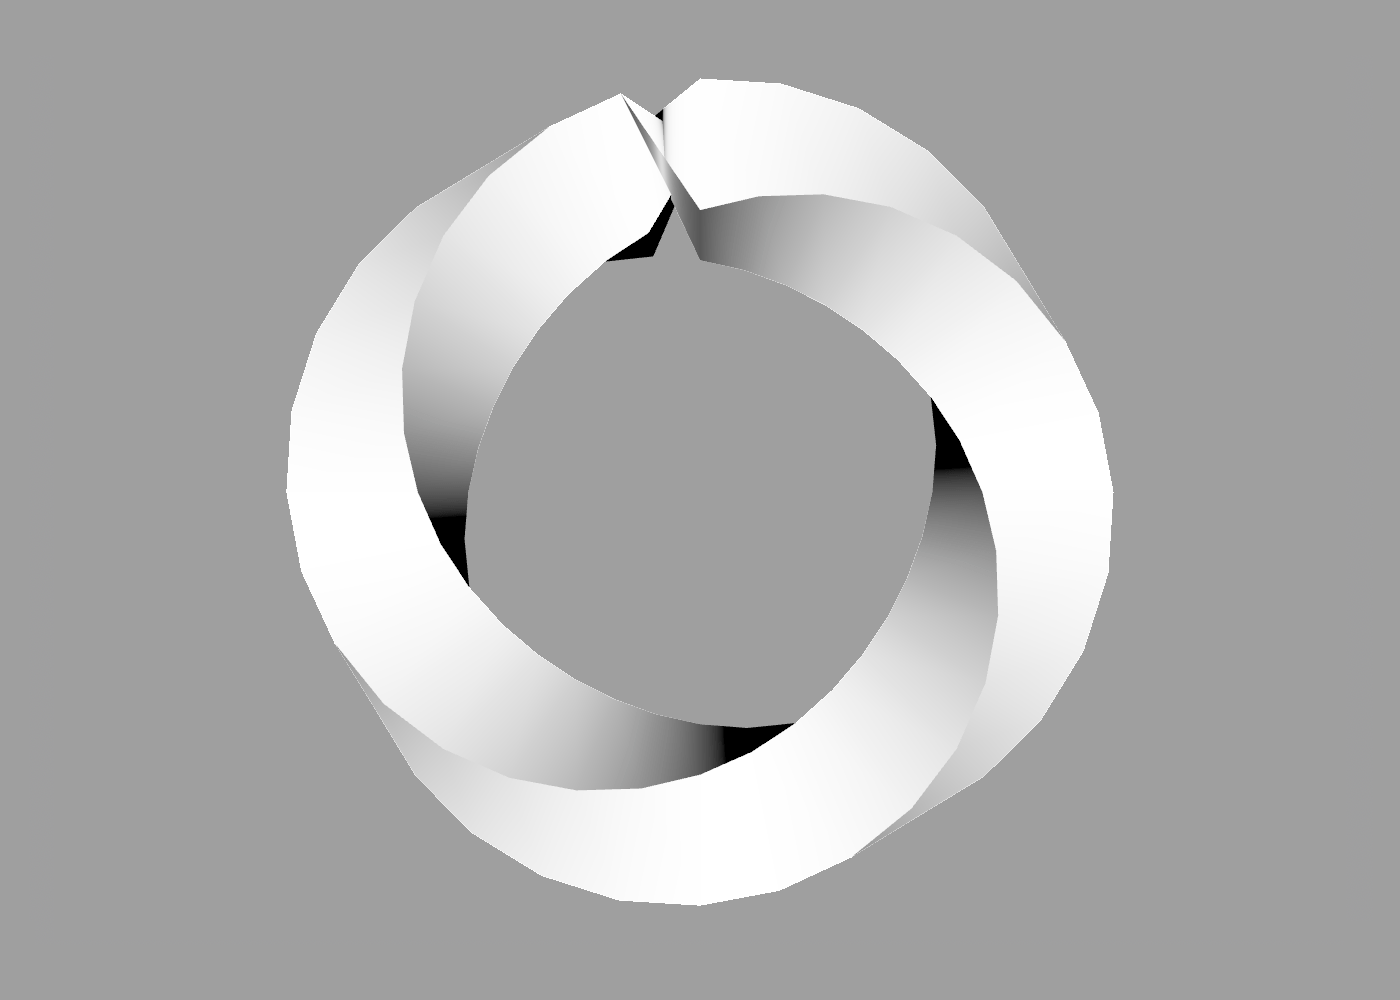 Twisted circle seam